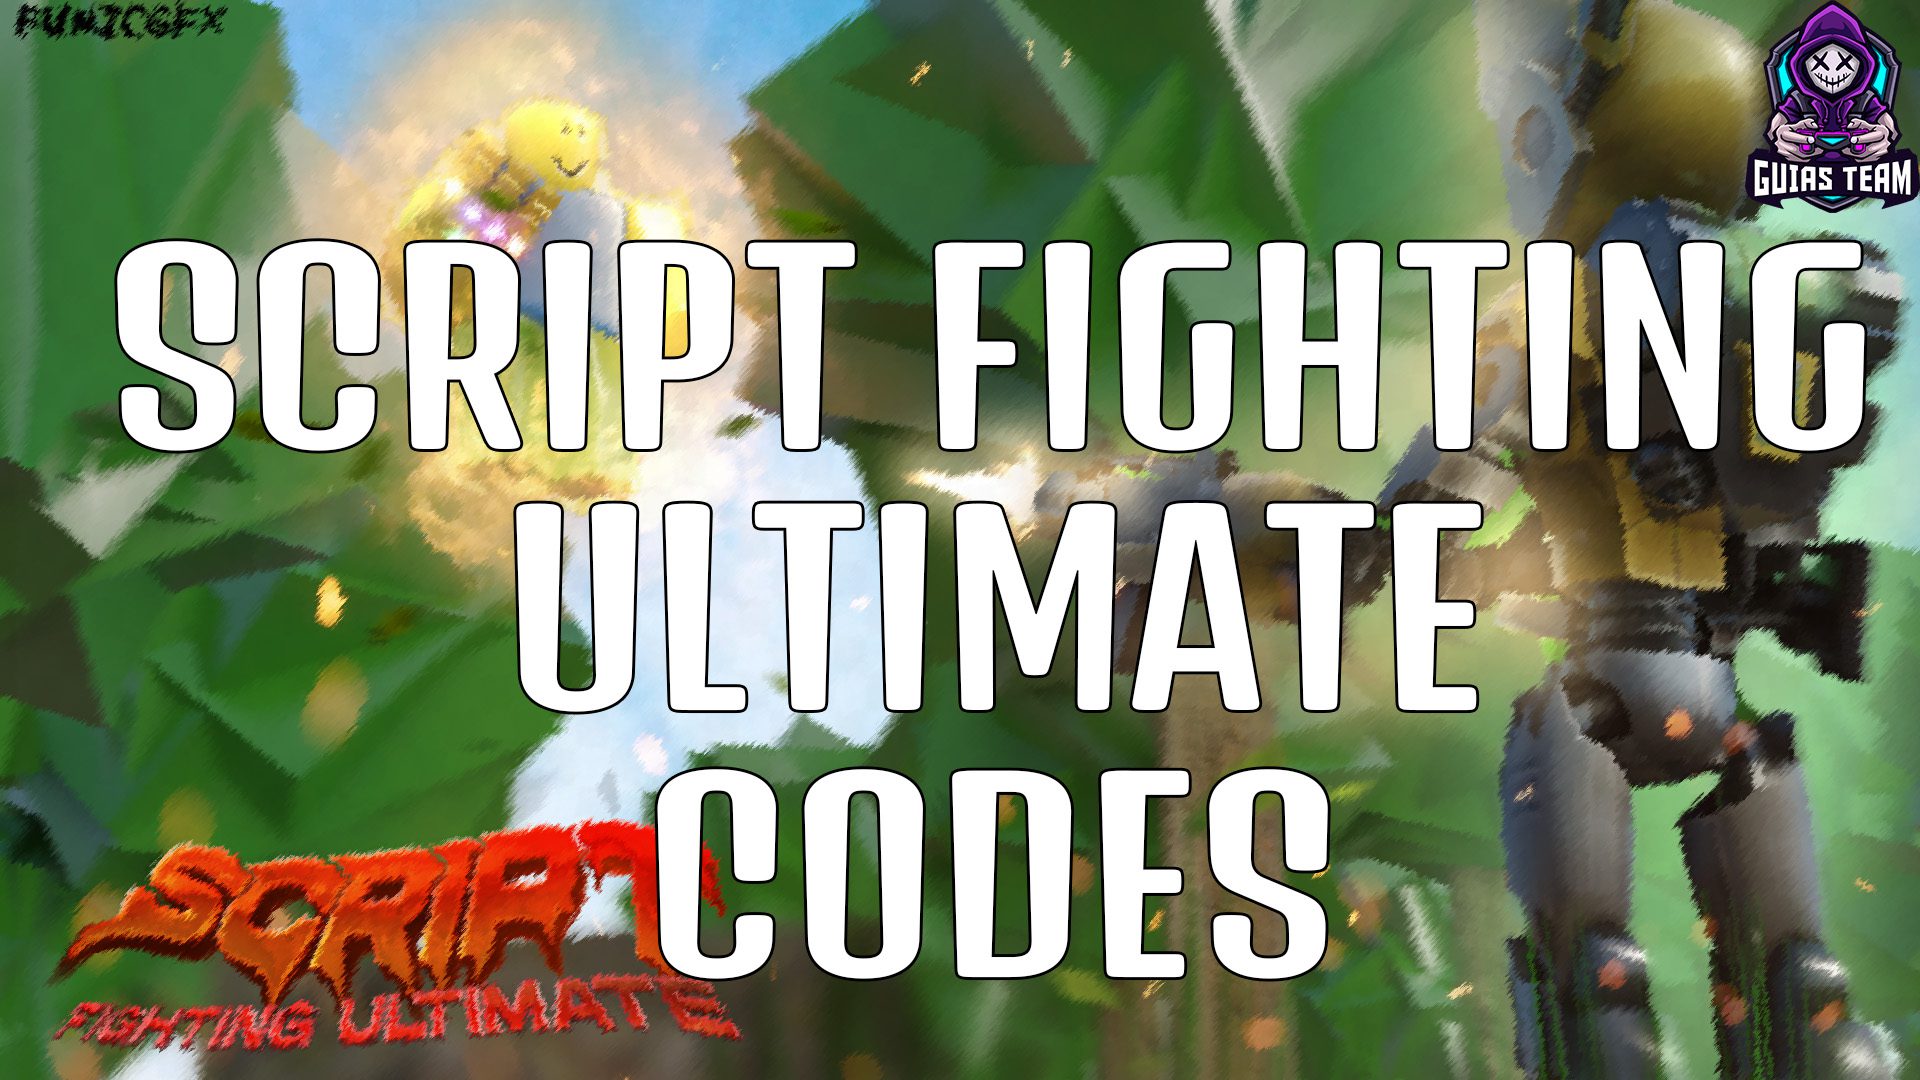 Codes of Script Fighting Ultimate September 2022